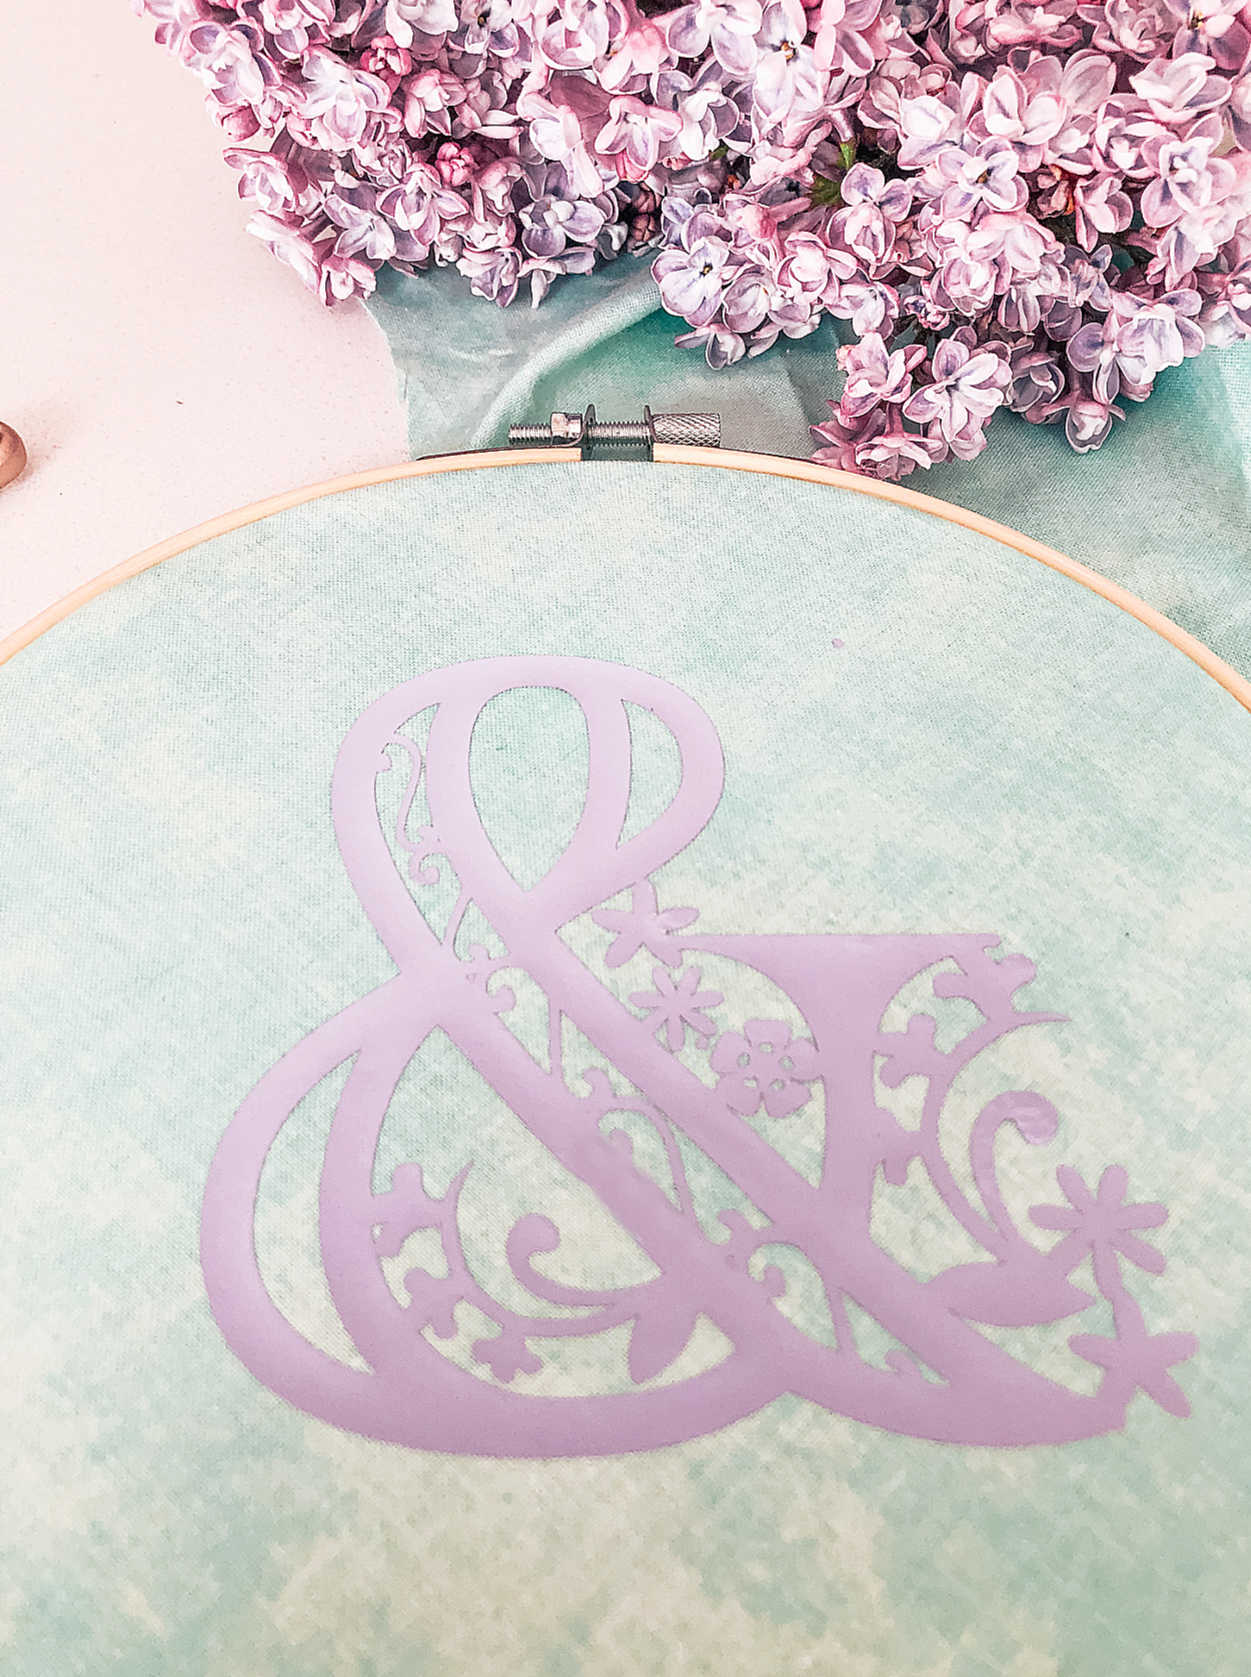 DIY Embroidery Hoop With Cricut Iron On Vinyl